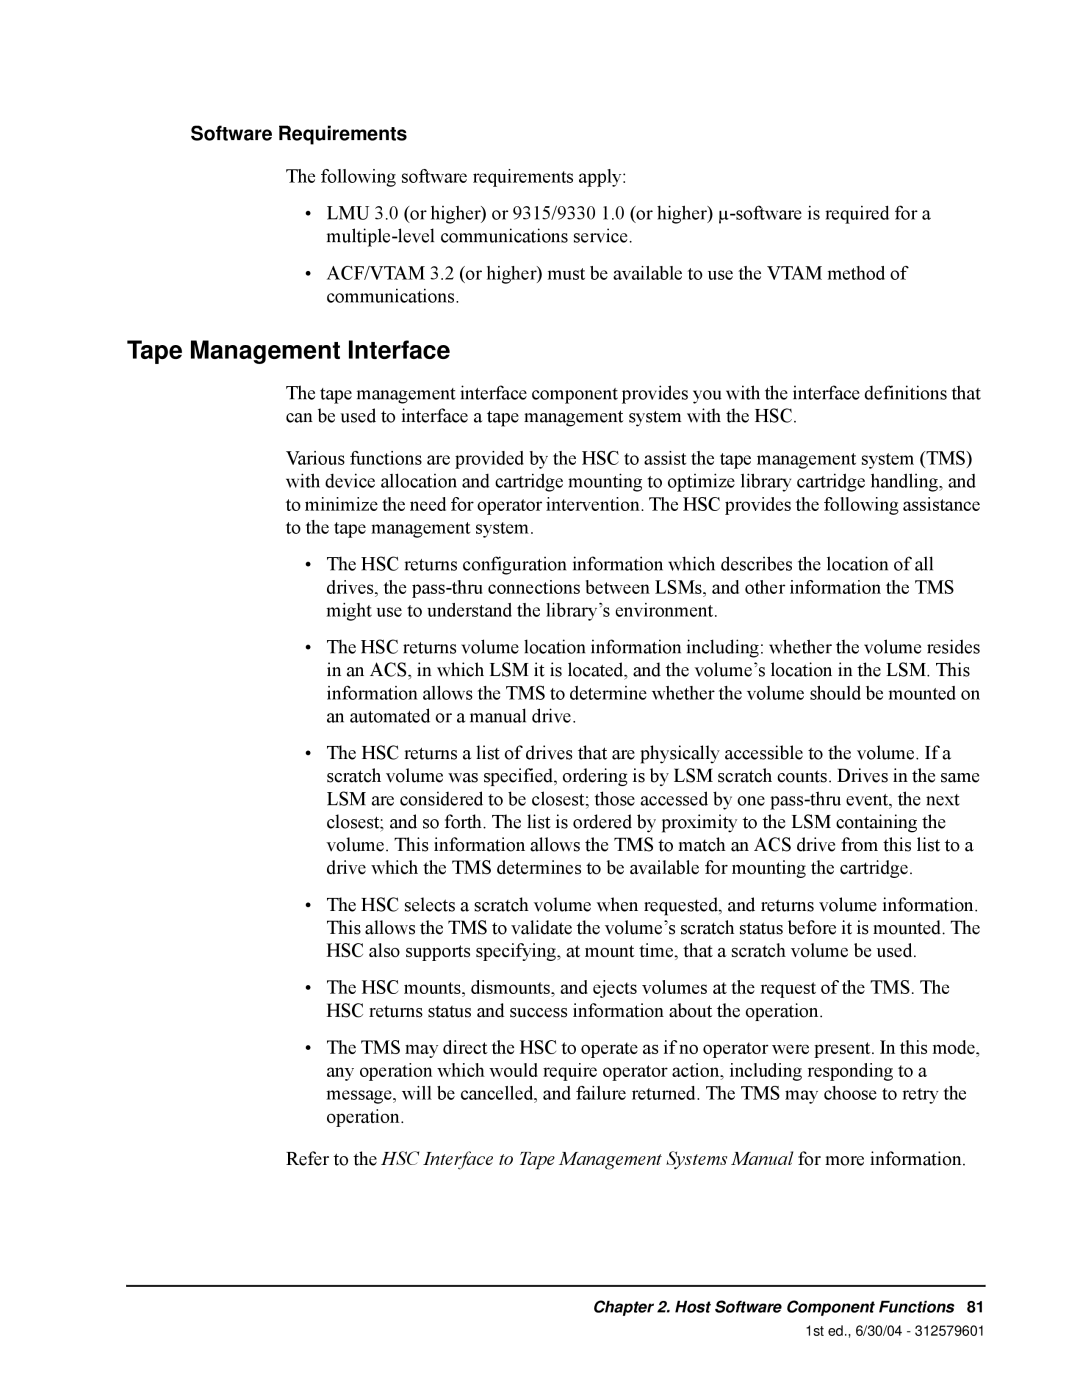 StorageTek 6 manual Tape Management Interface, Software Requirements 